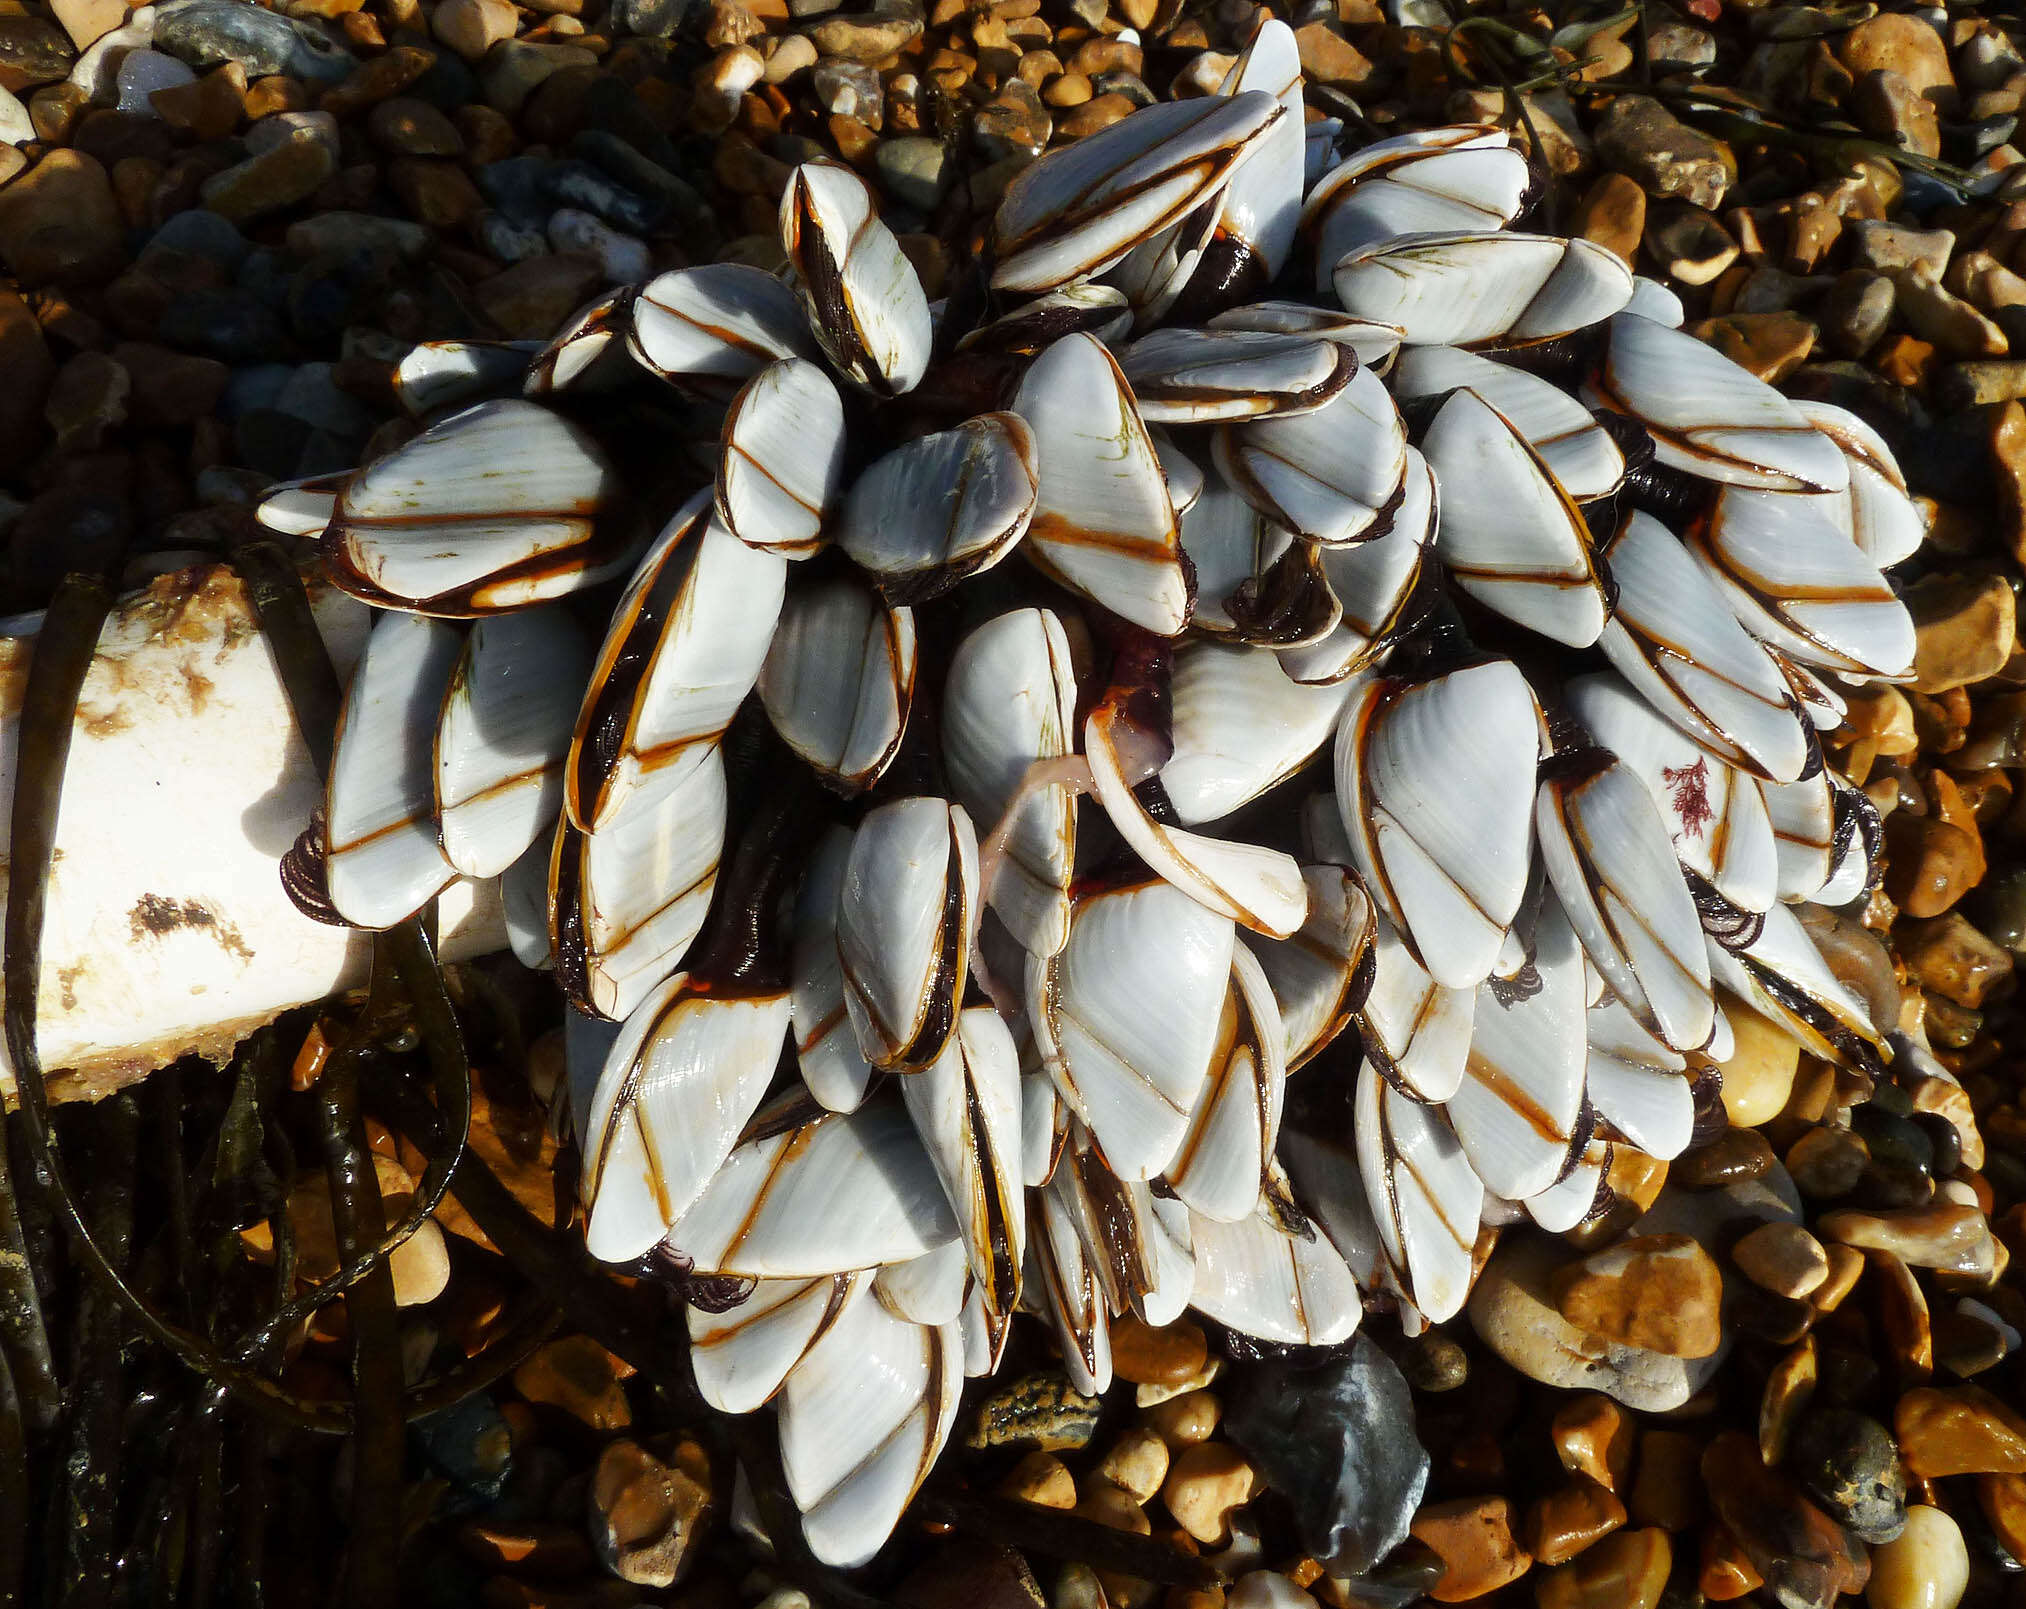 Image of Goose barnacle